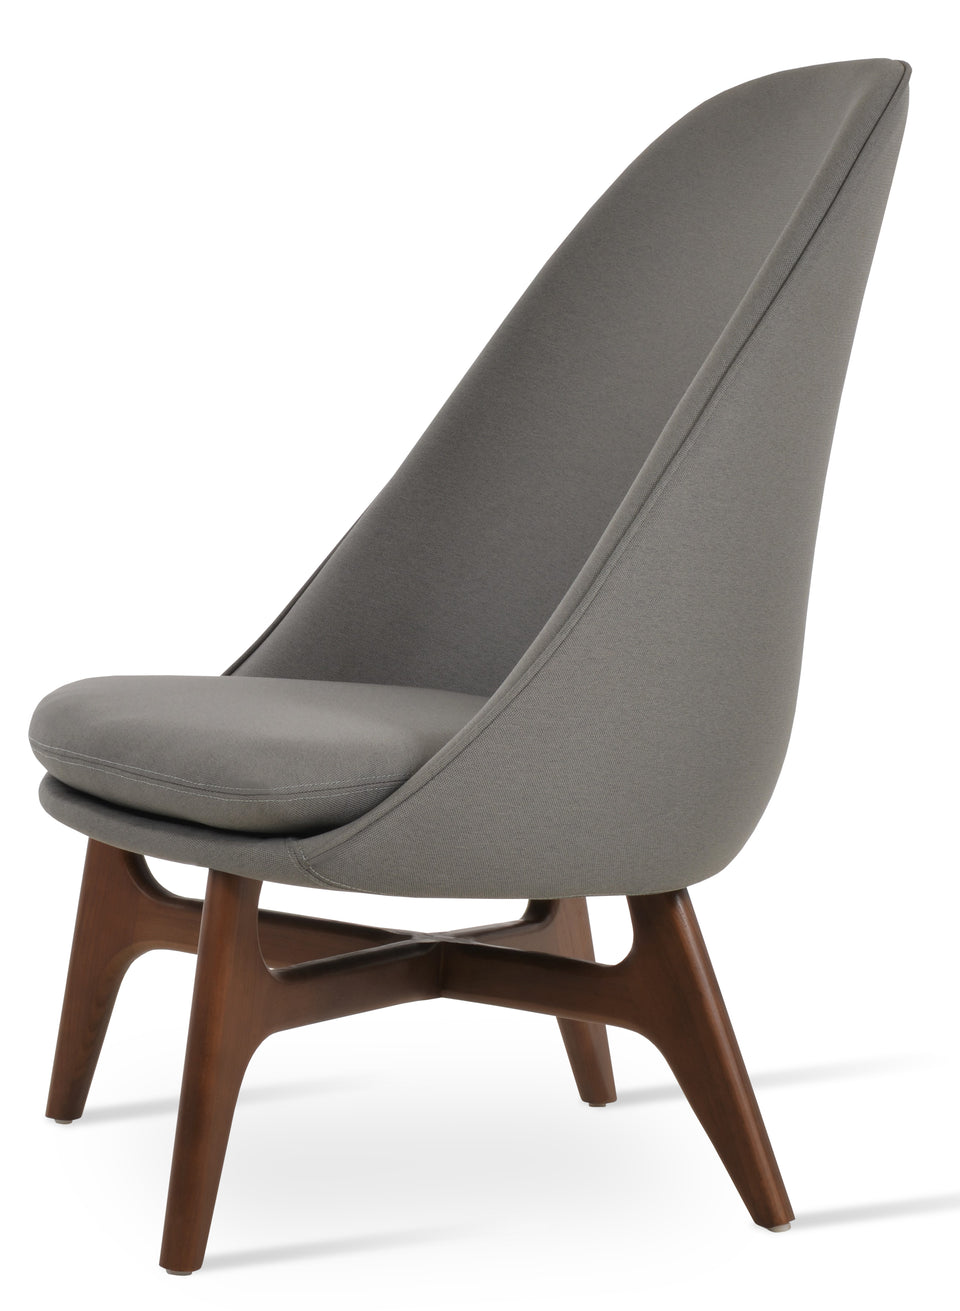 Avanos Lounge Chair Wood Base.